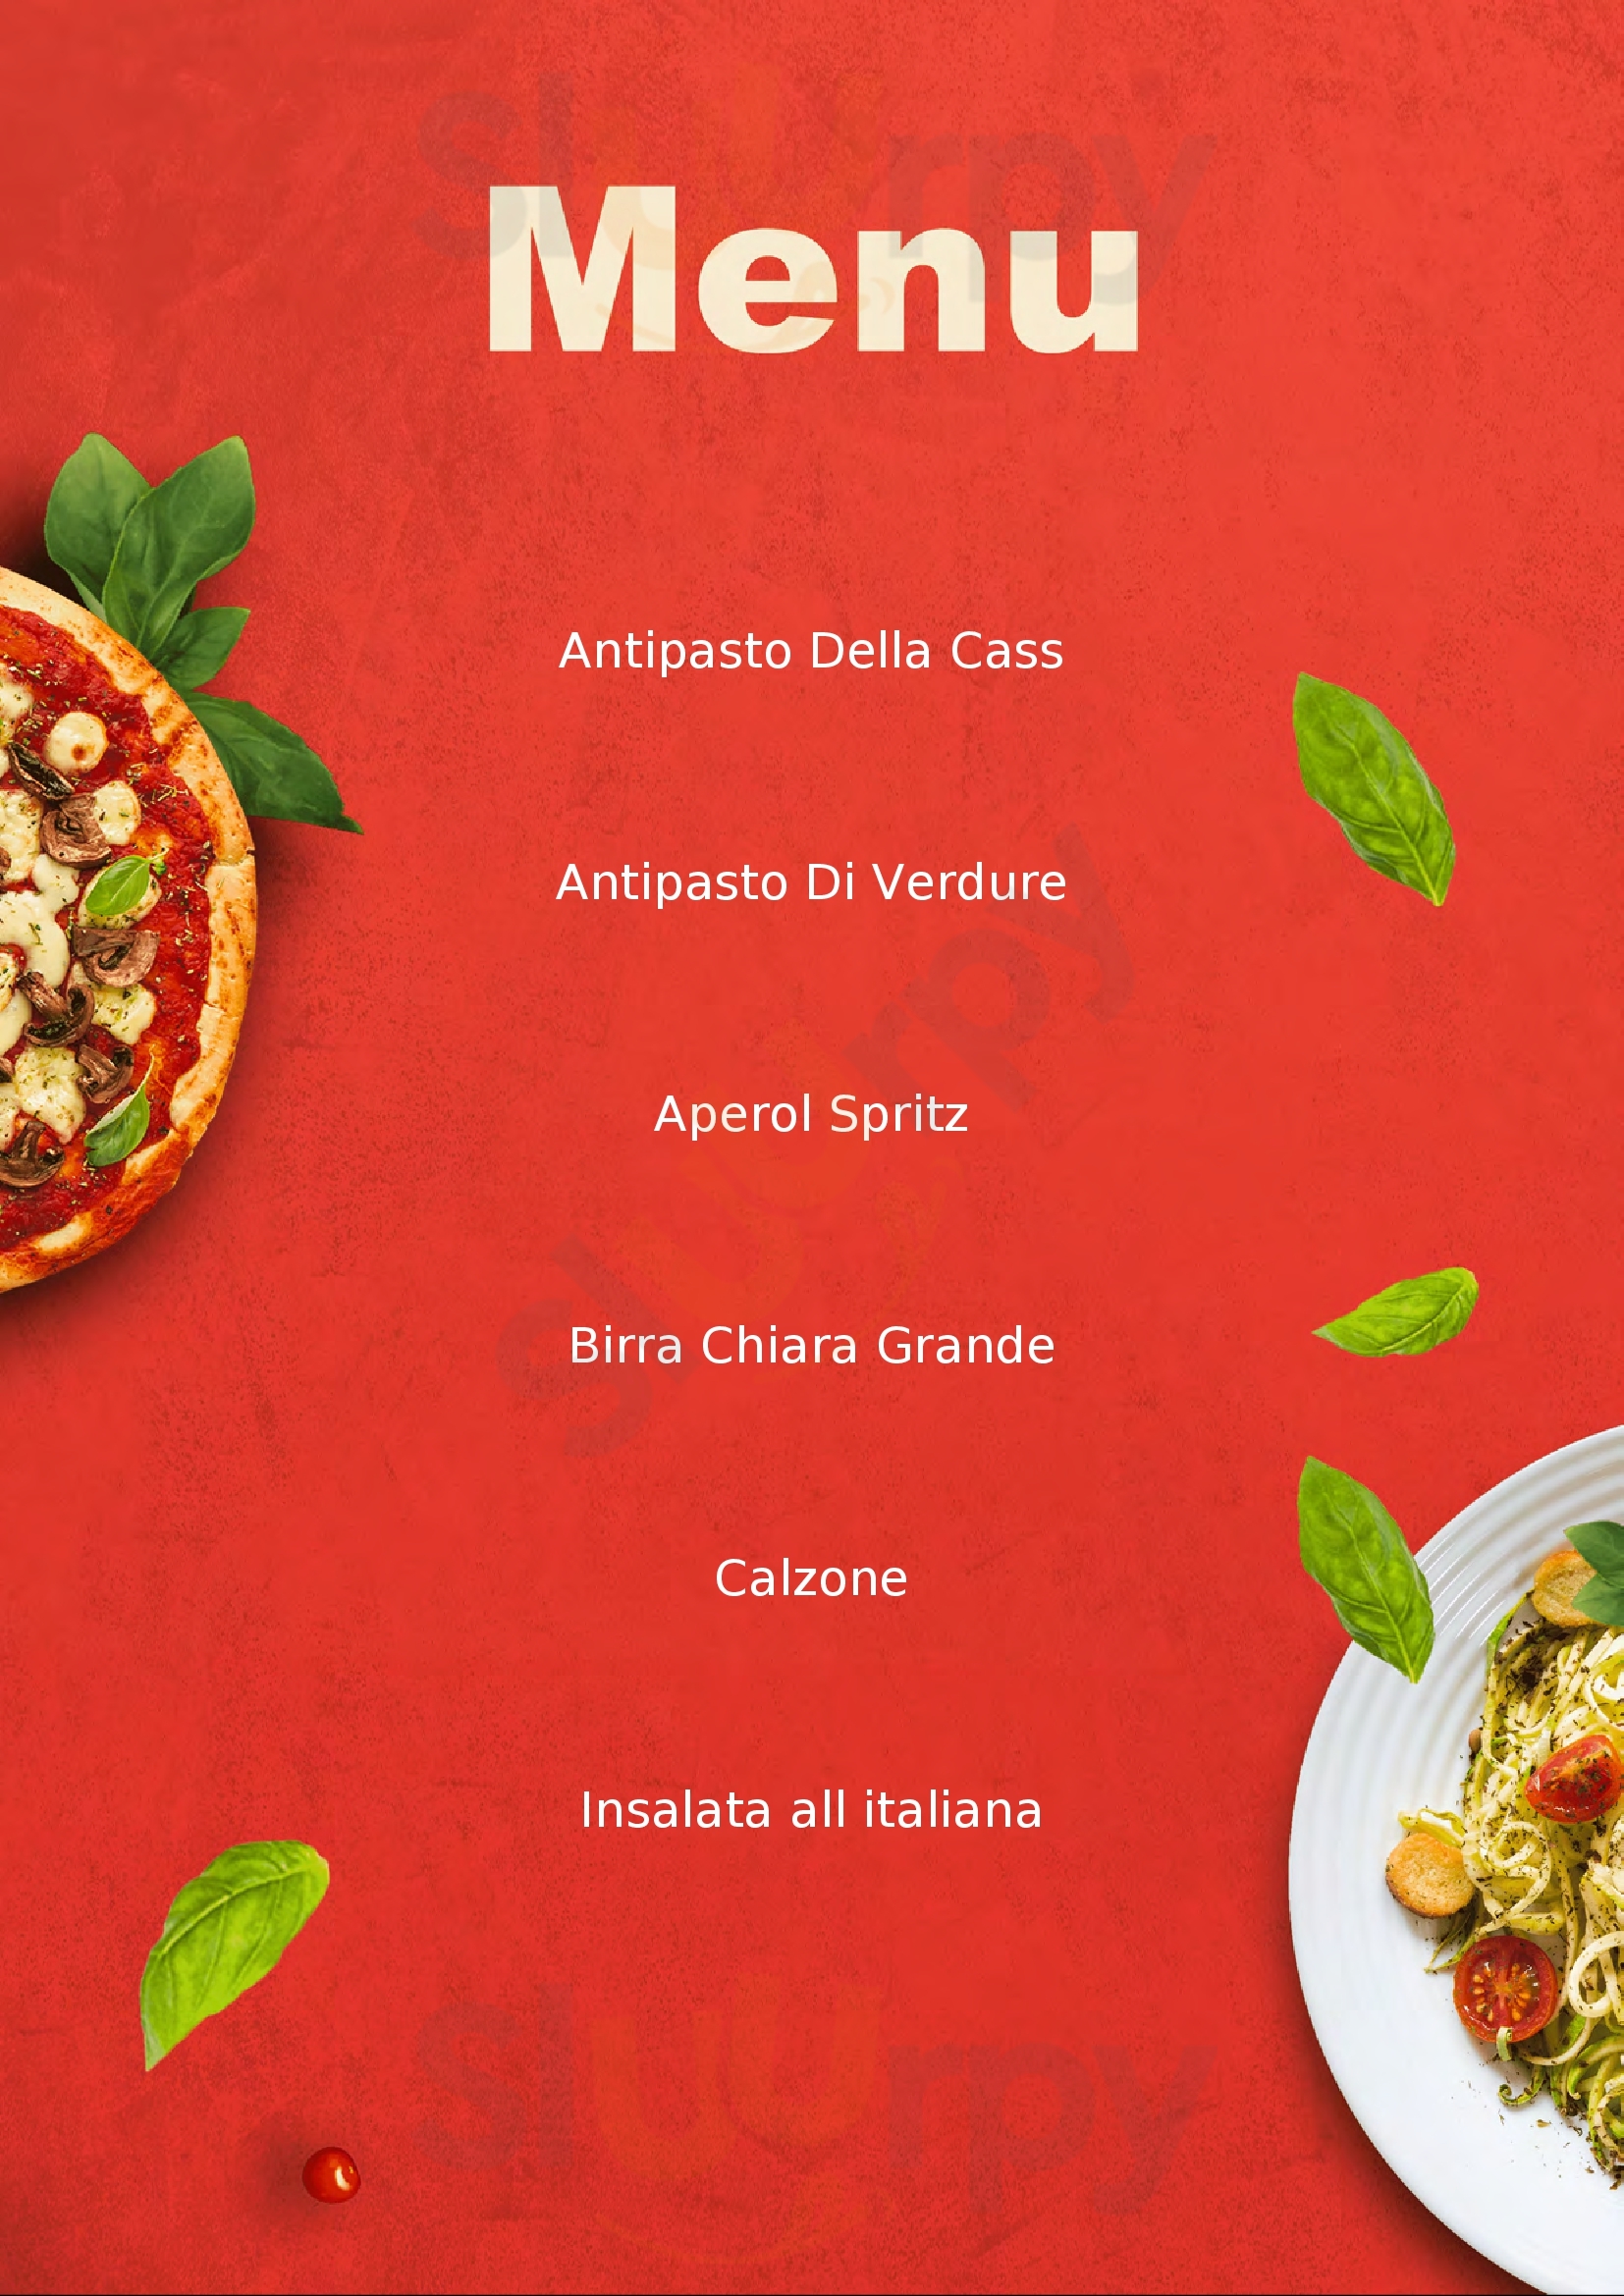 Ristorante Pizzeria Ciro Roma menù 1 pagina